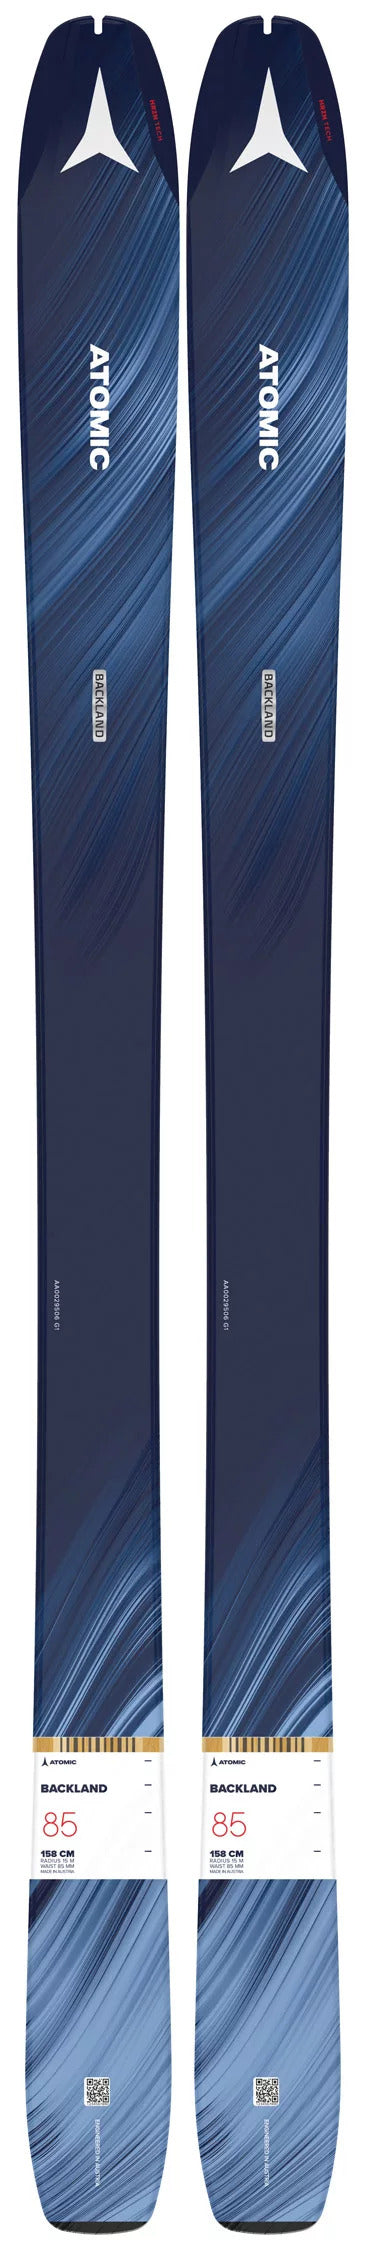 Skis neufs Atomic BACKLAND 85 W (skis nus - fixations en option) - neuf déstockage